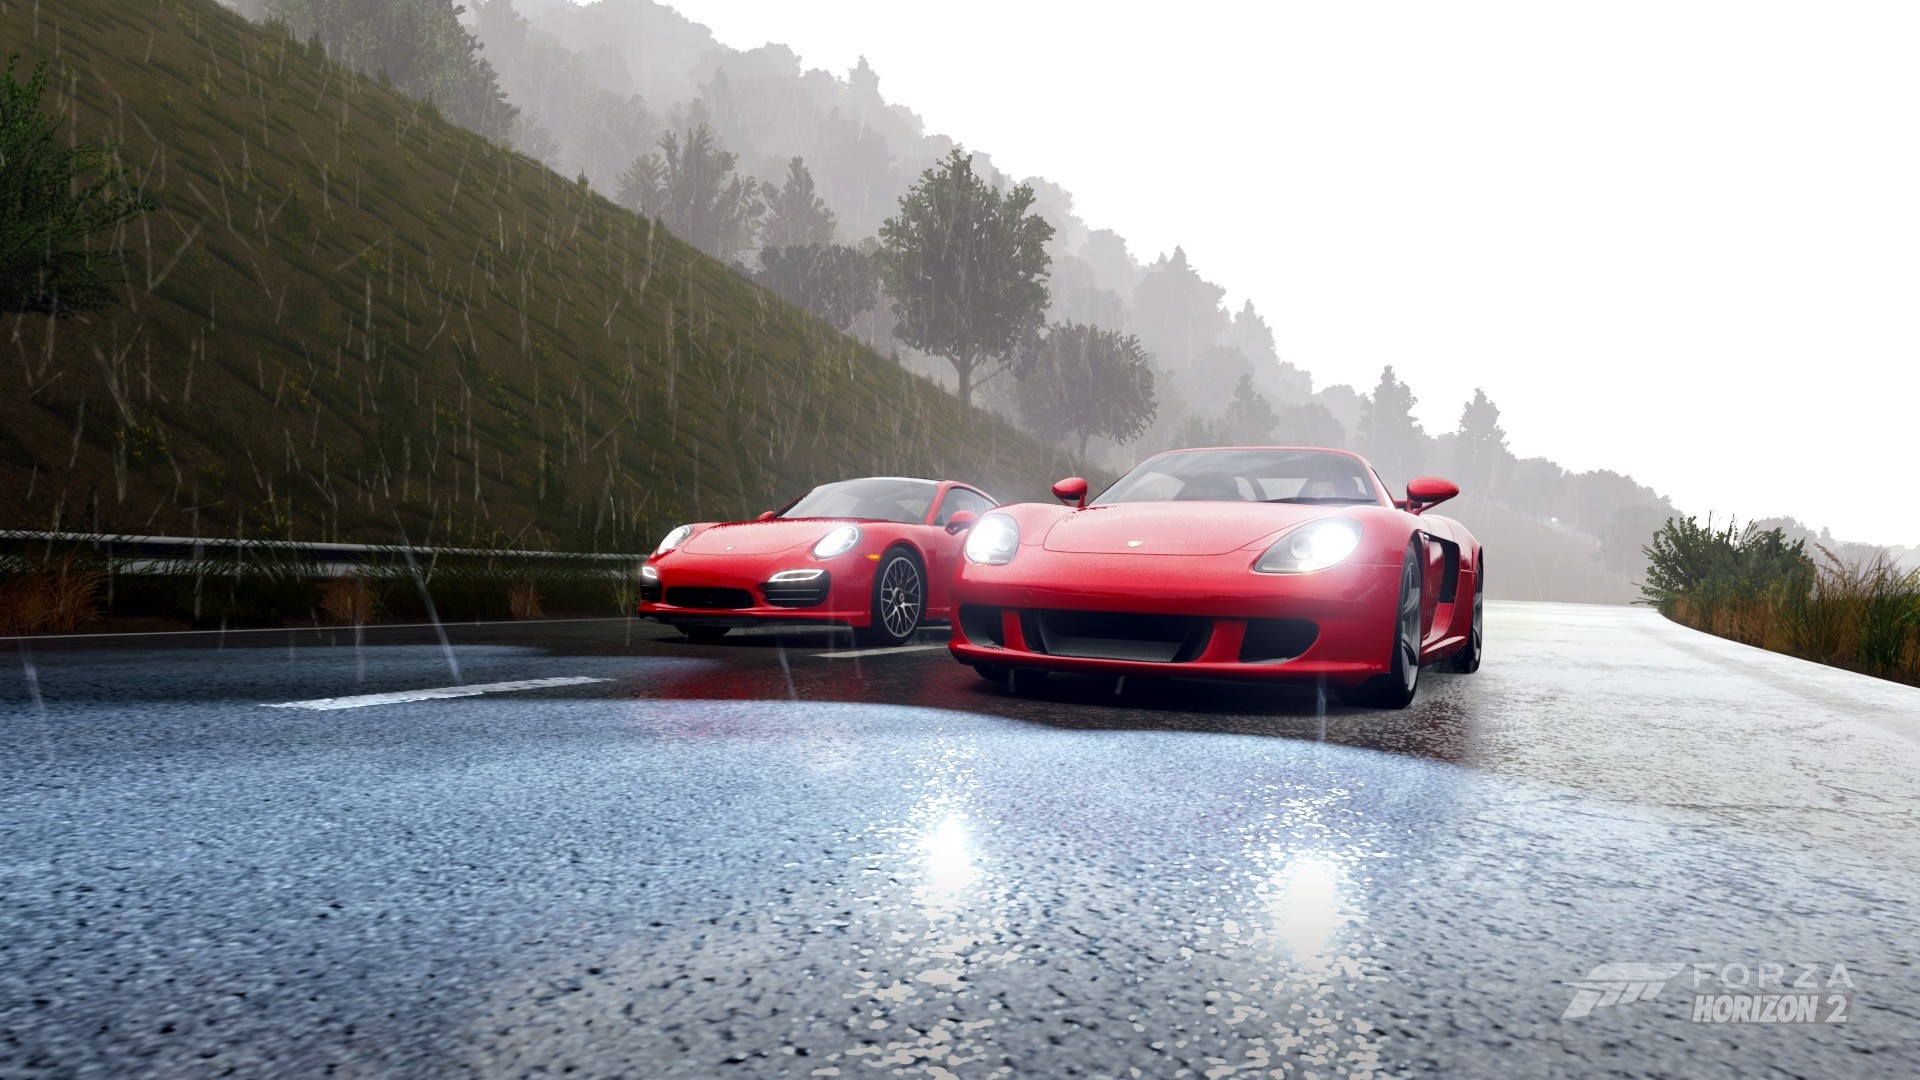 General 1920x1080 Forza Horizon 2 Porsche Carrera GT video games Turn 10 Studios racing Porsche car vehicle red cars